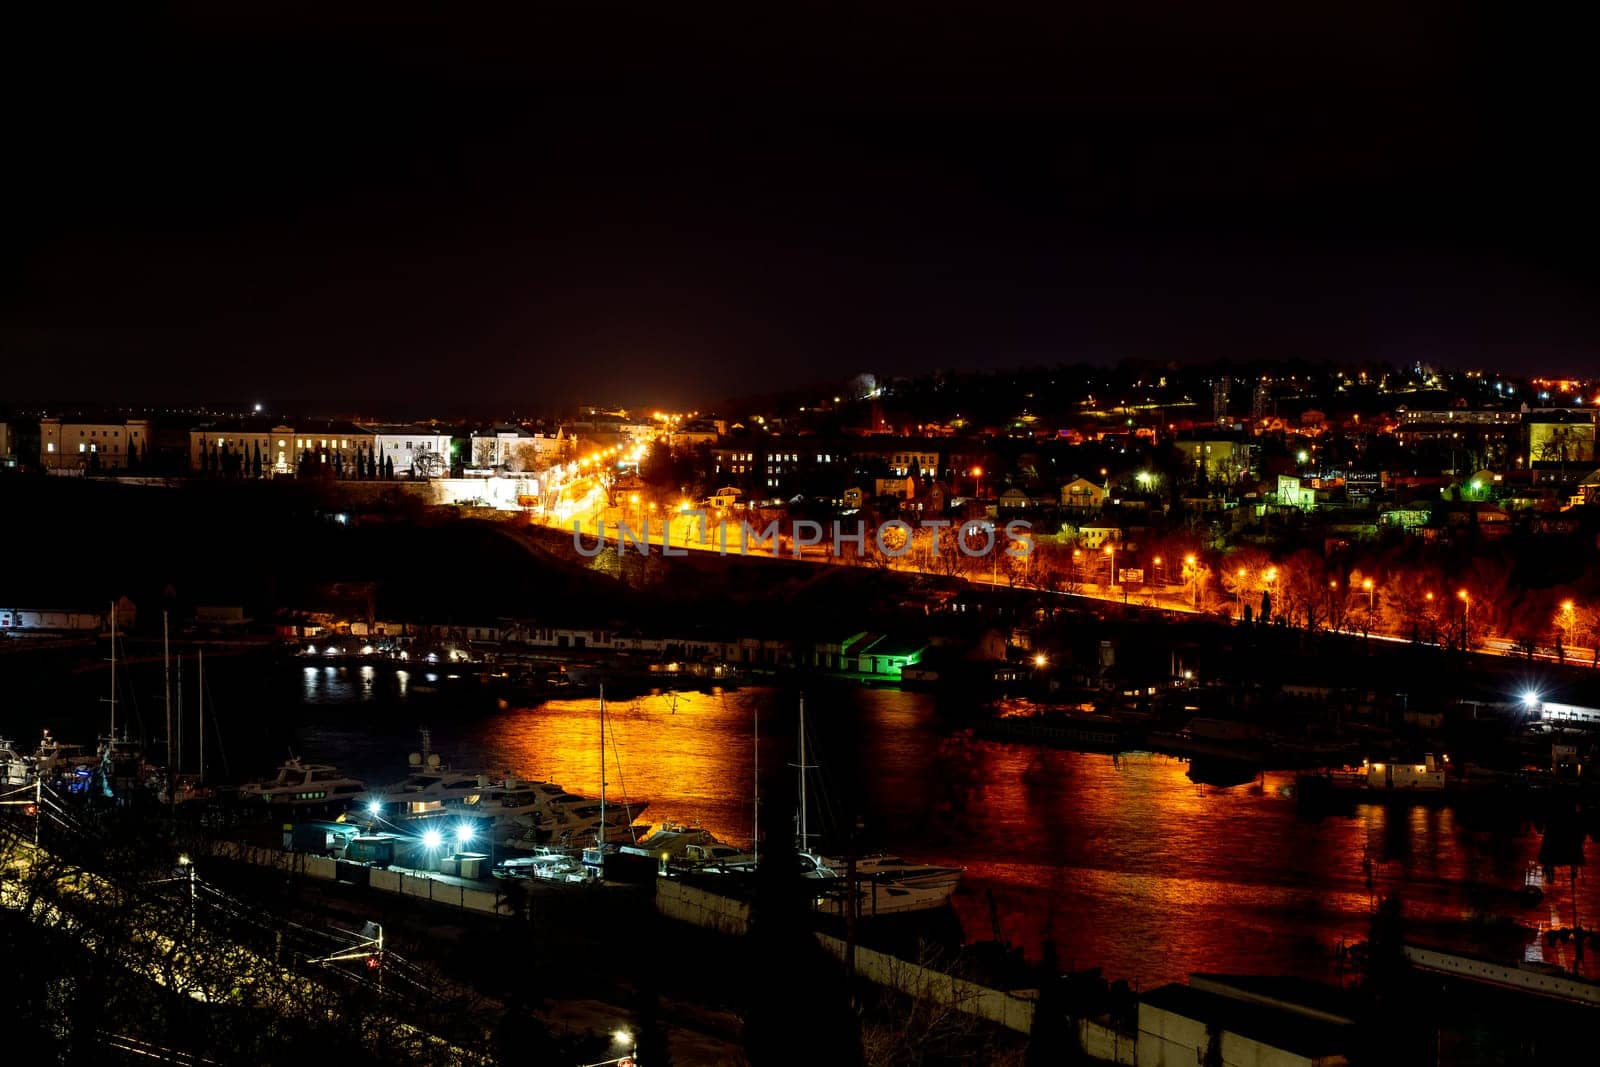 Cityscape bokeh, Blurred Photo, cityscape at twilight time